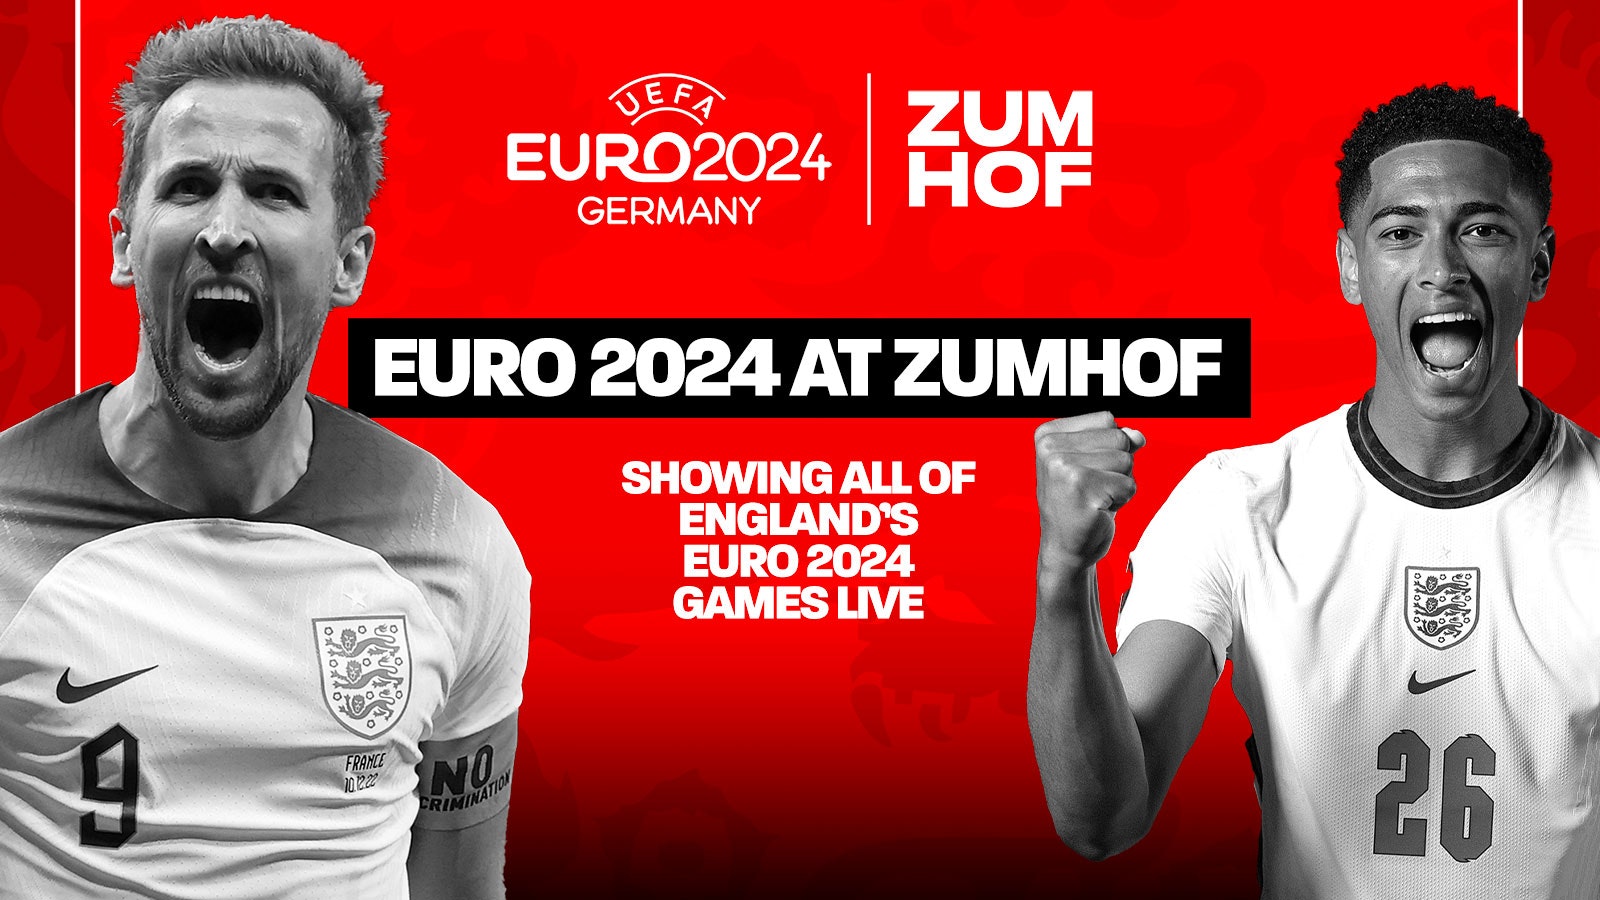 ENGLAND V SLOVENIA – EURO 2024 AT ZUMHOF